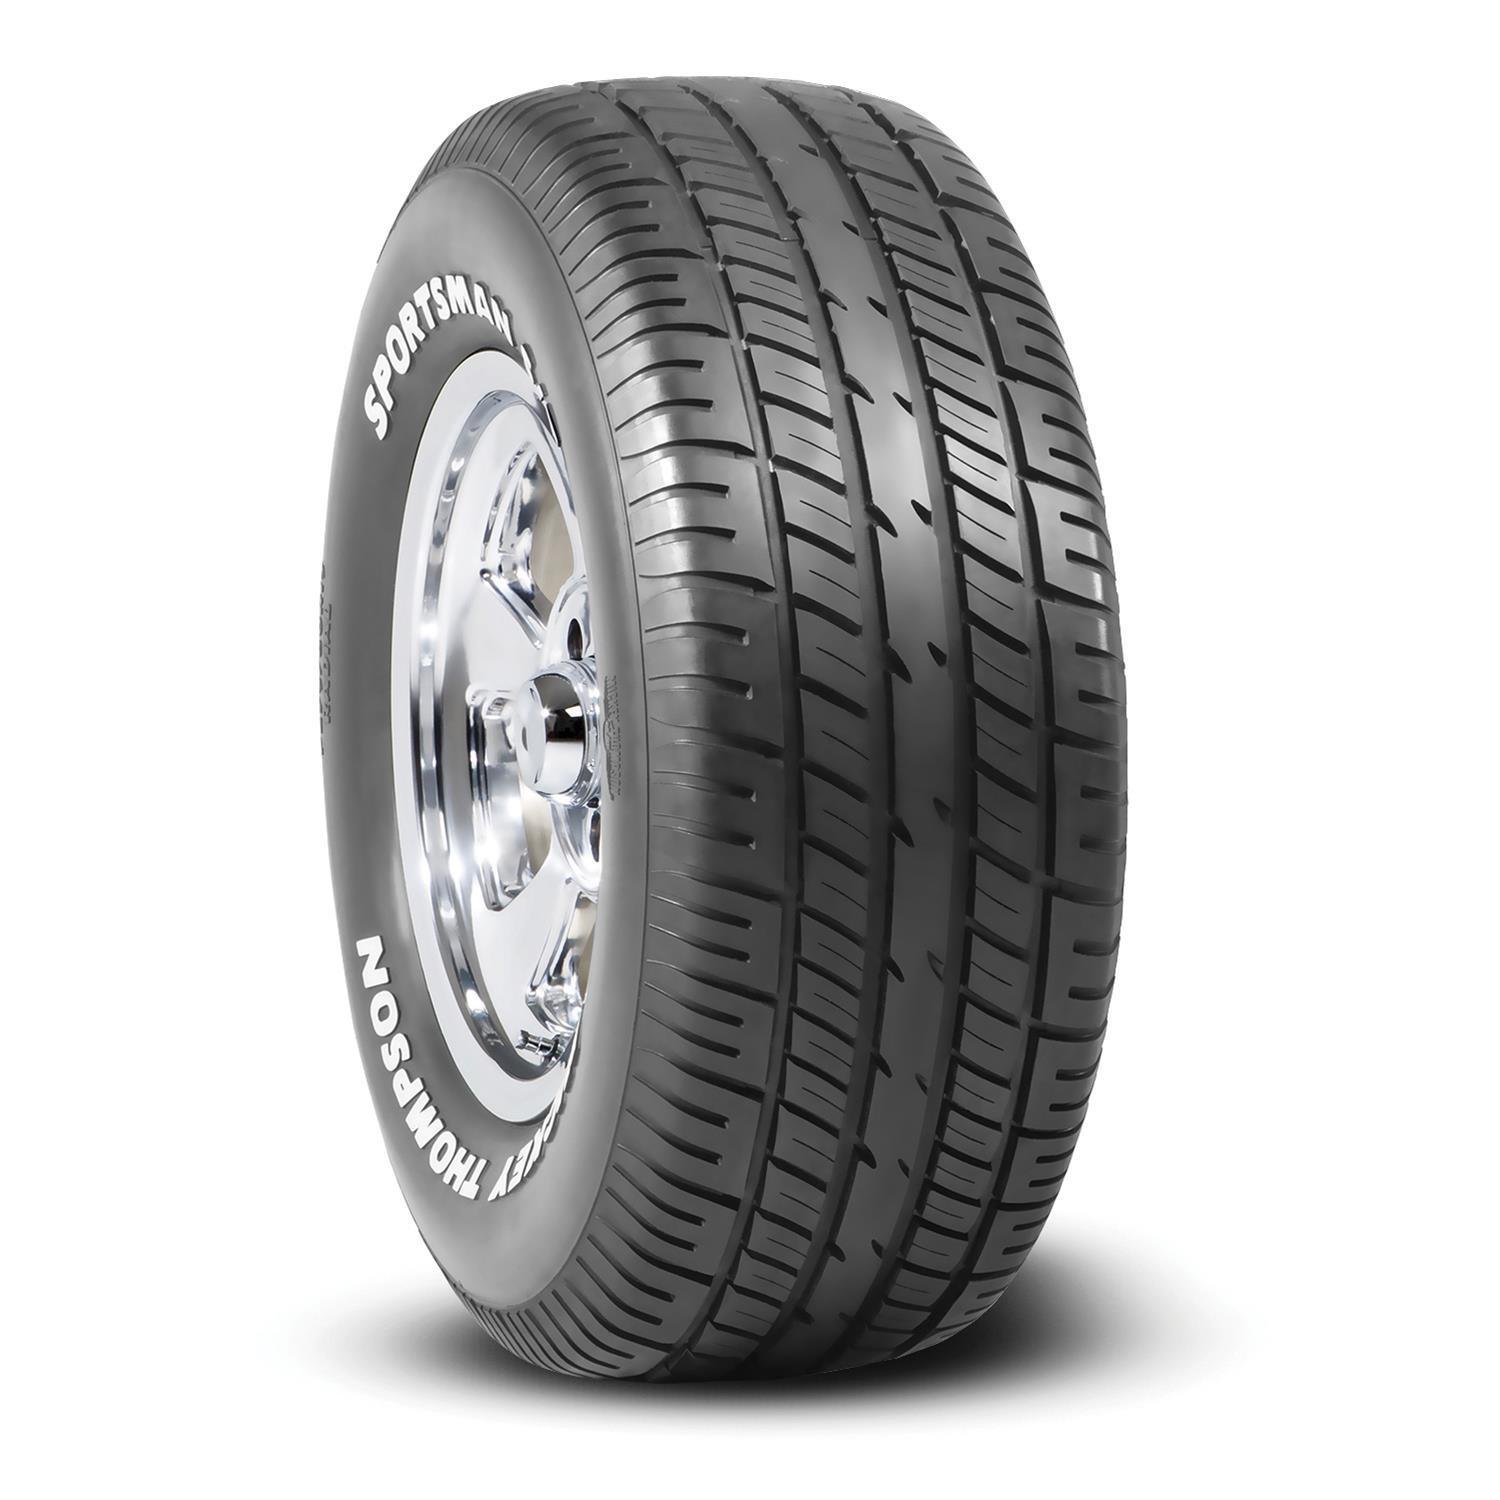 P235/60R15 Sportsman S/T Tire - Burlile Performance Products